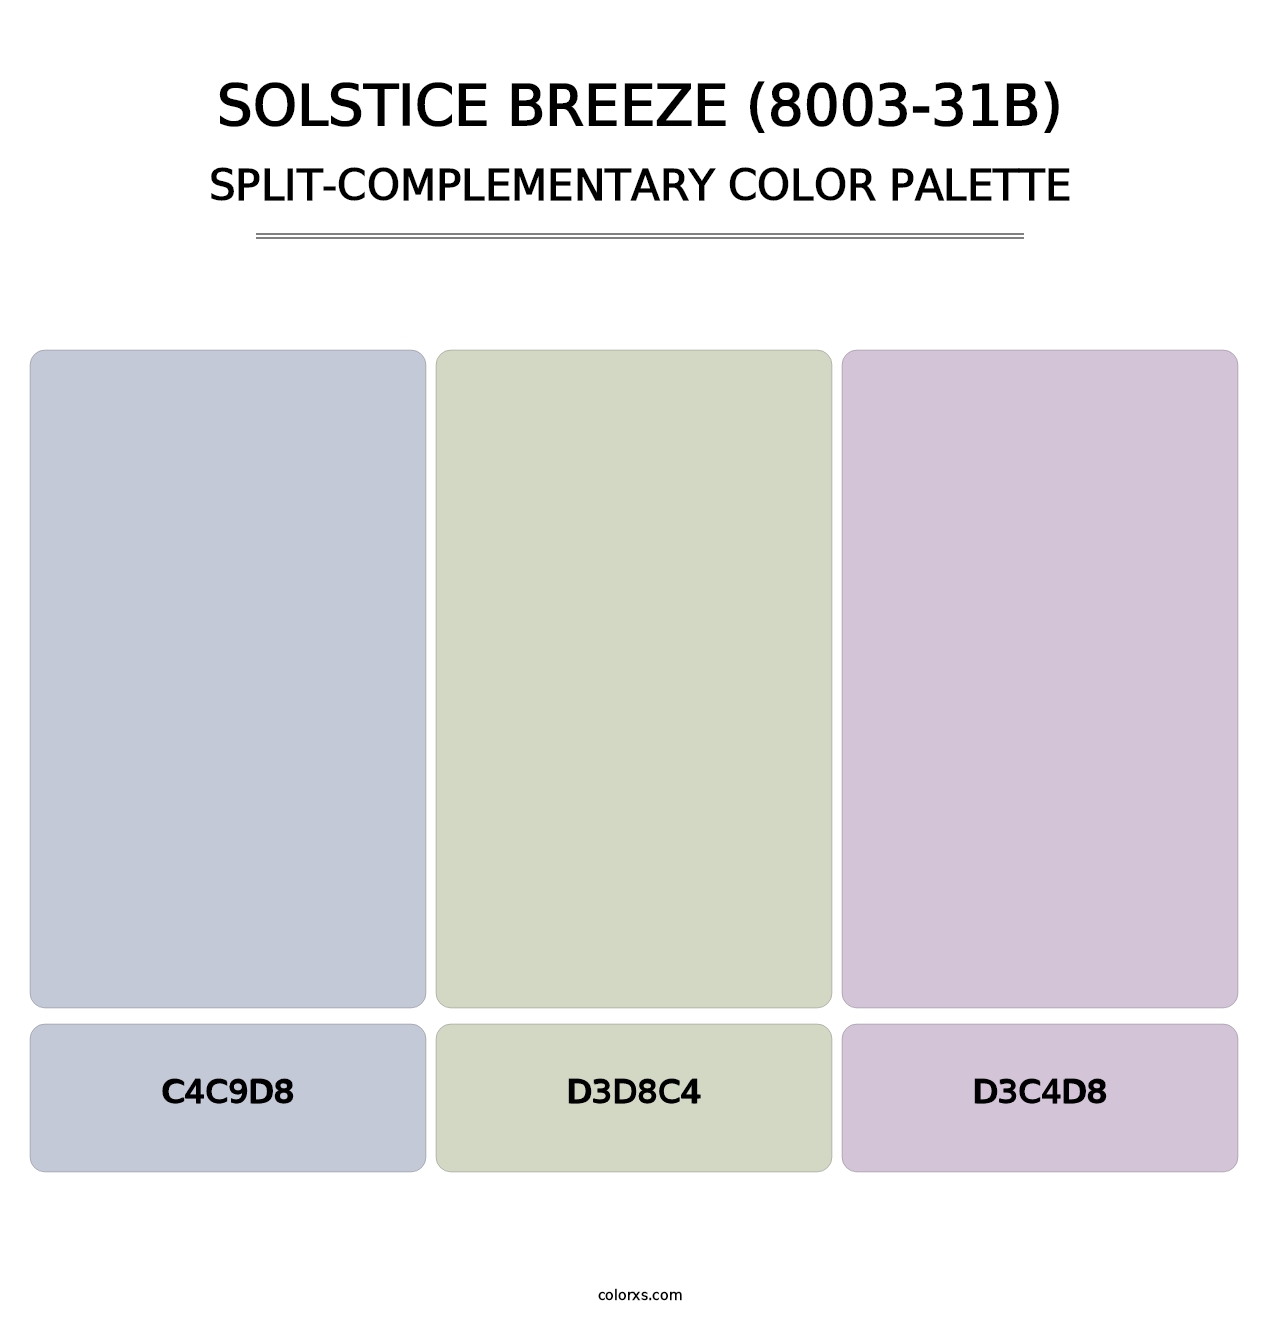 Solstice Breeze (8003-31B) - Split-Complementary Color Palette